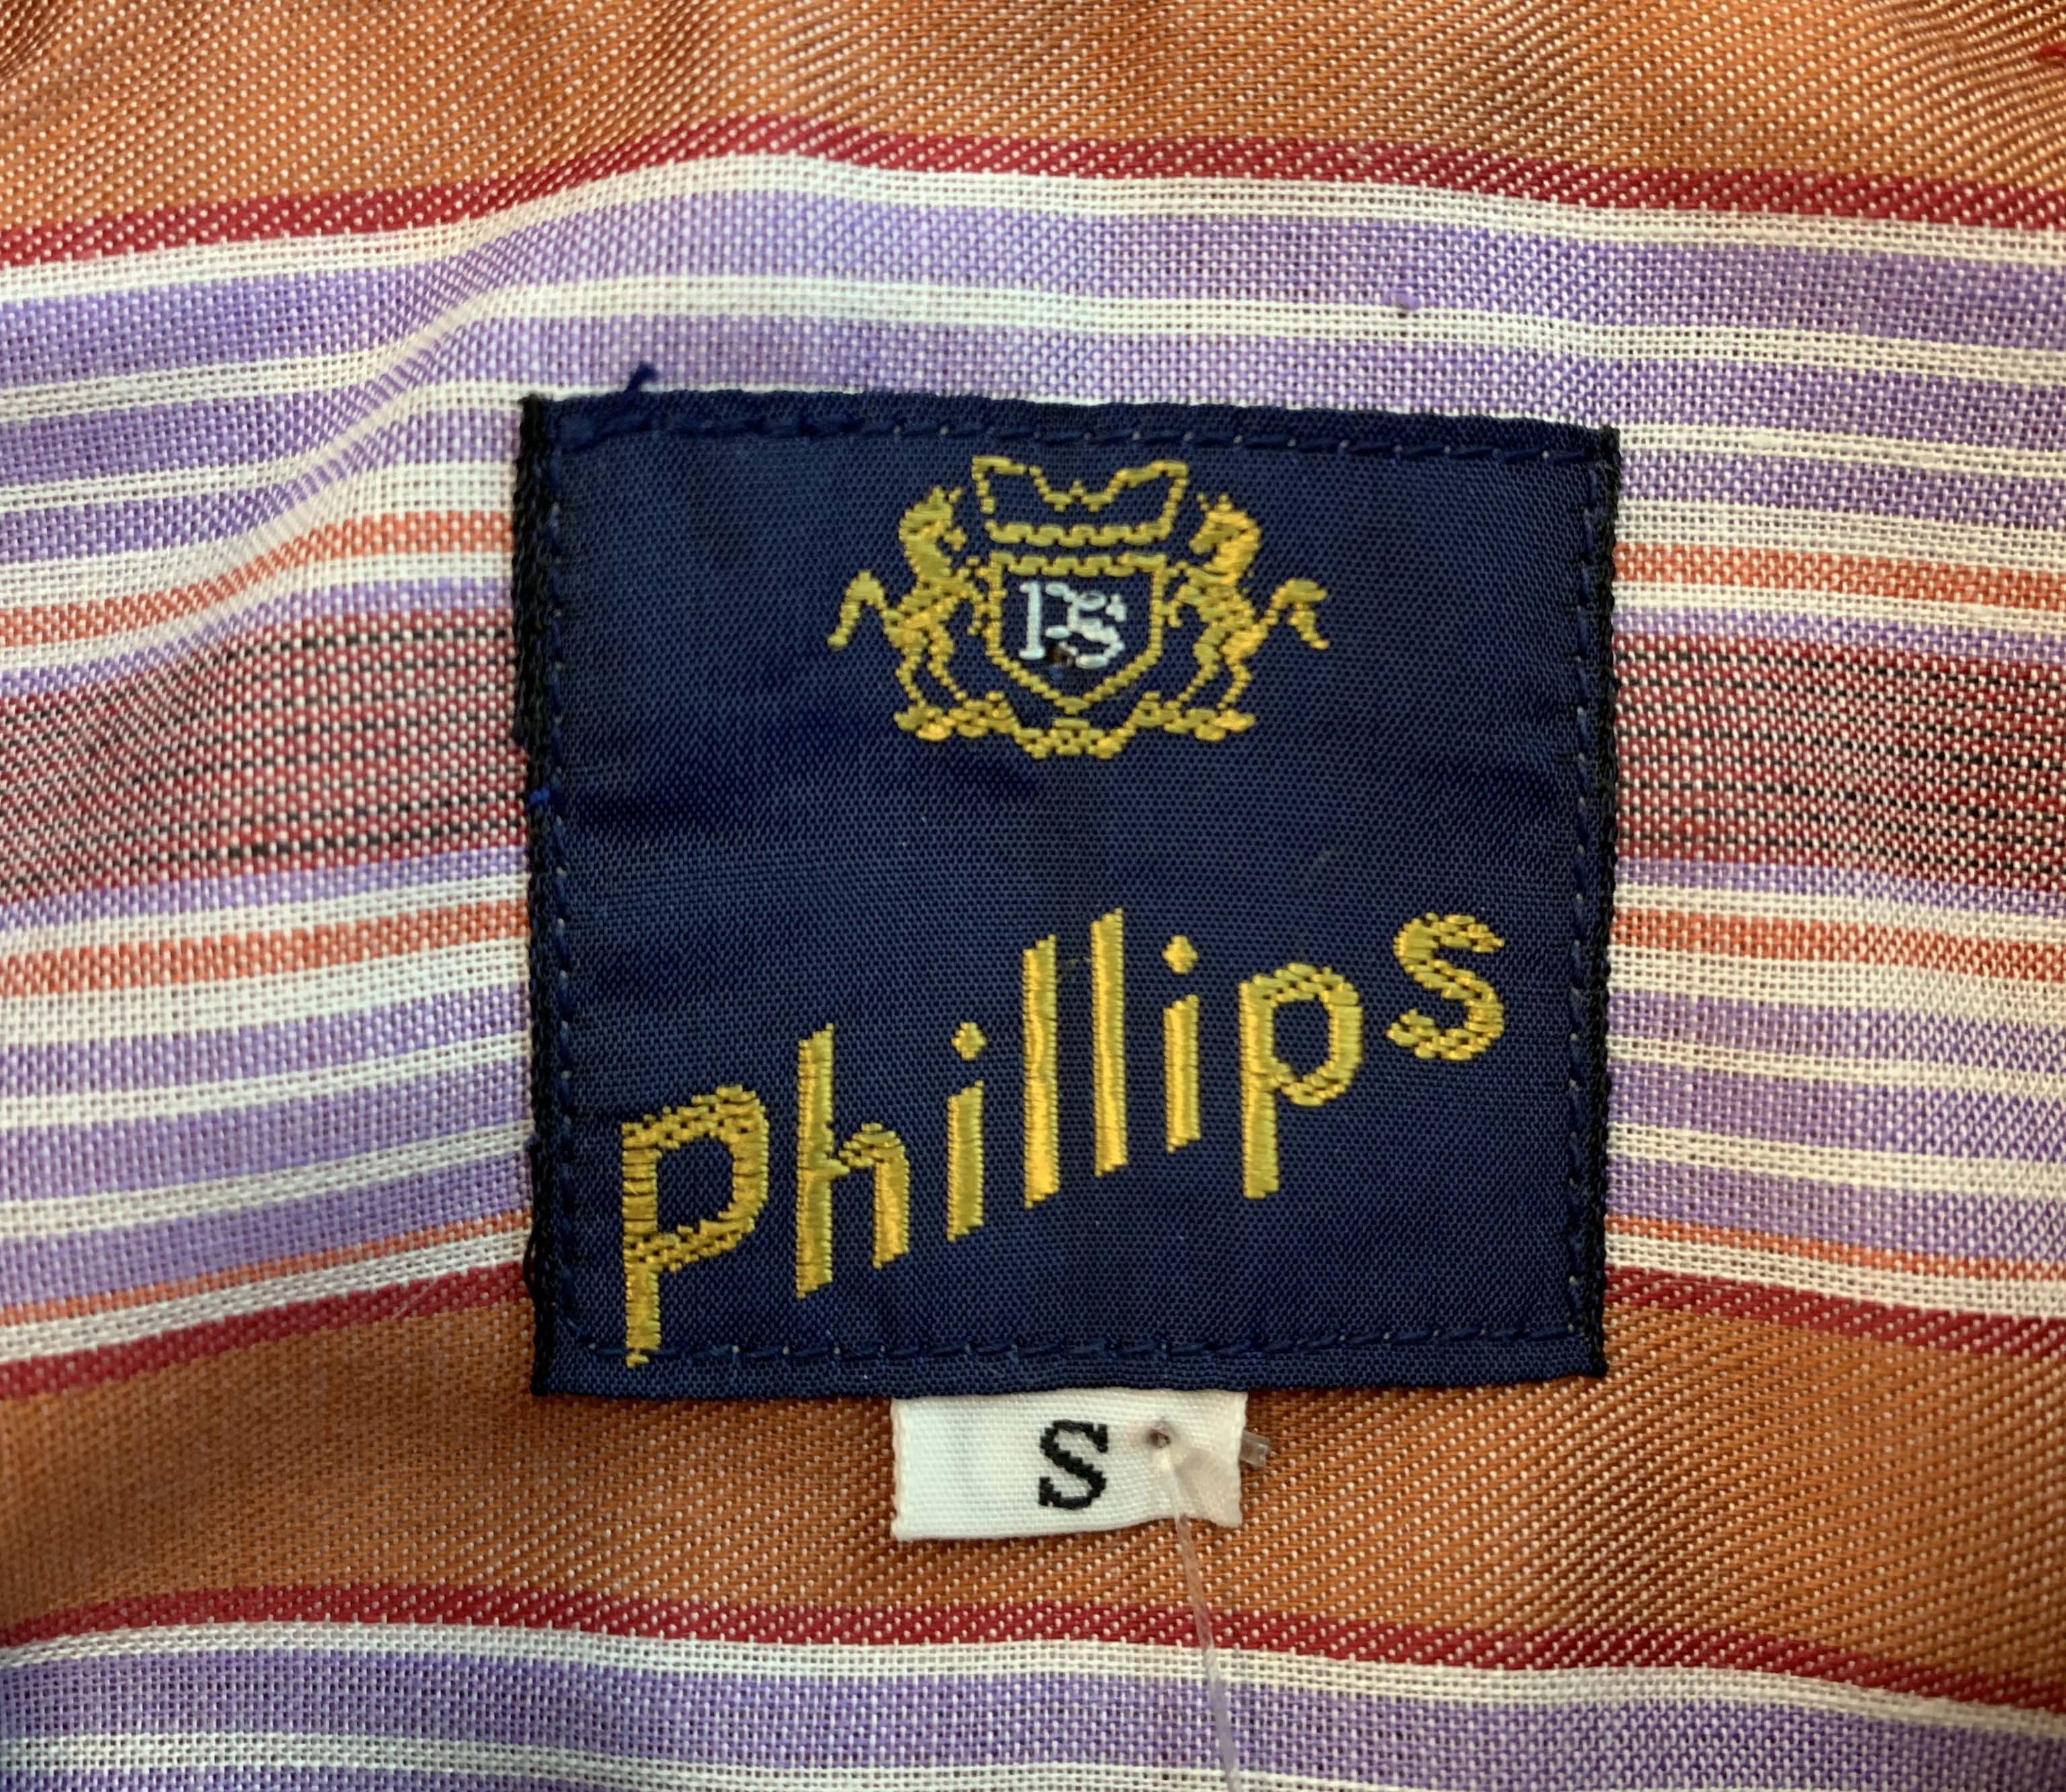 PHILLIPS brown & blue stripe shirt